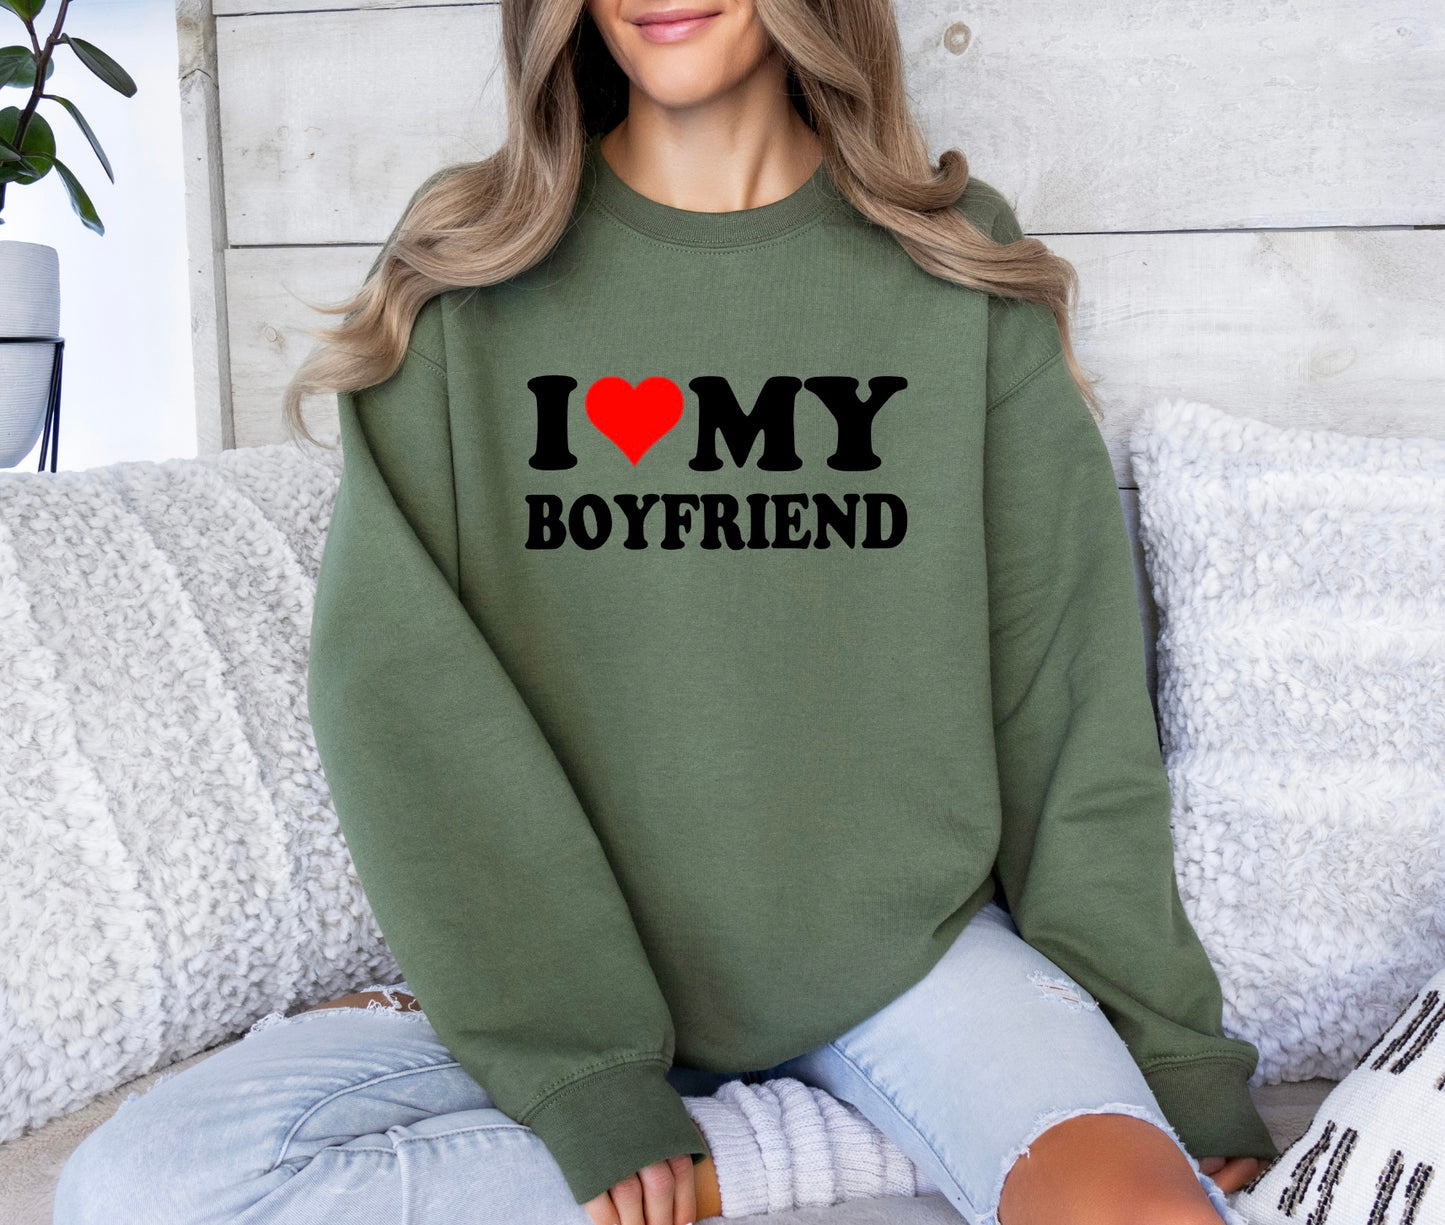 I Love My Boyfriend Shirt, I Love My Boyfriend Sweater, I Love My Boyfriend Sweatshirt, I Love My Boyfriend Hoodie, Girlfriend Gift, Valentine Present, Funny Shirt